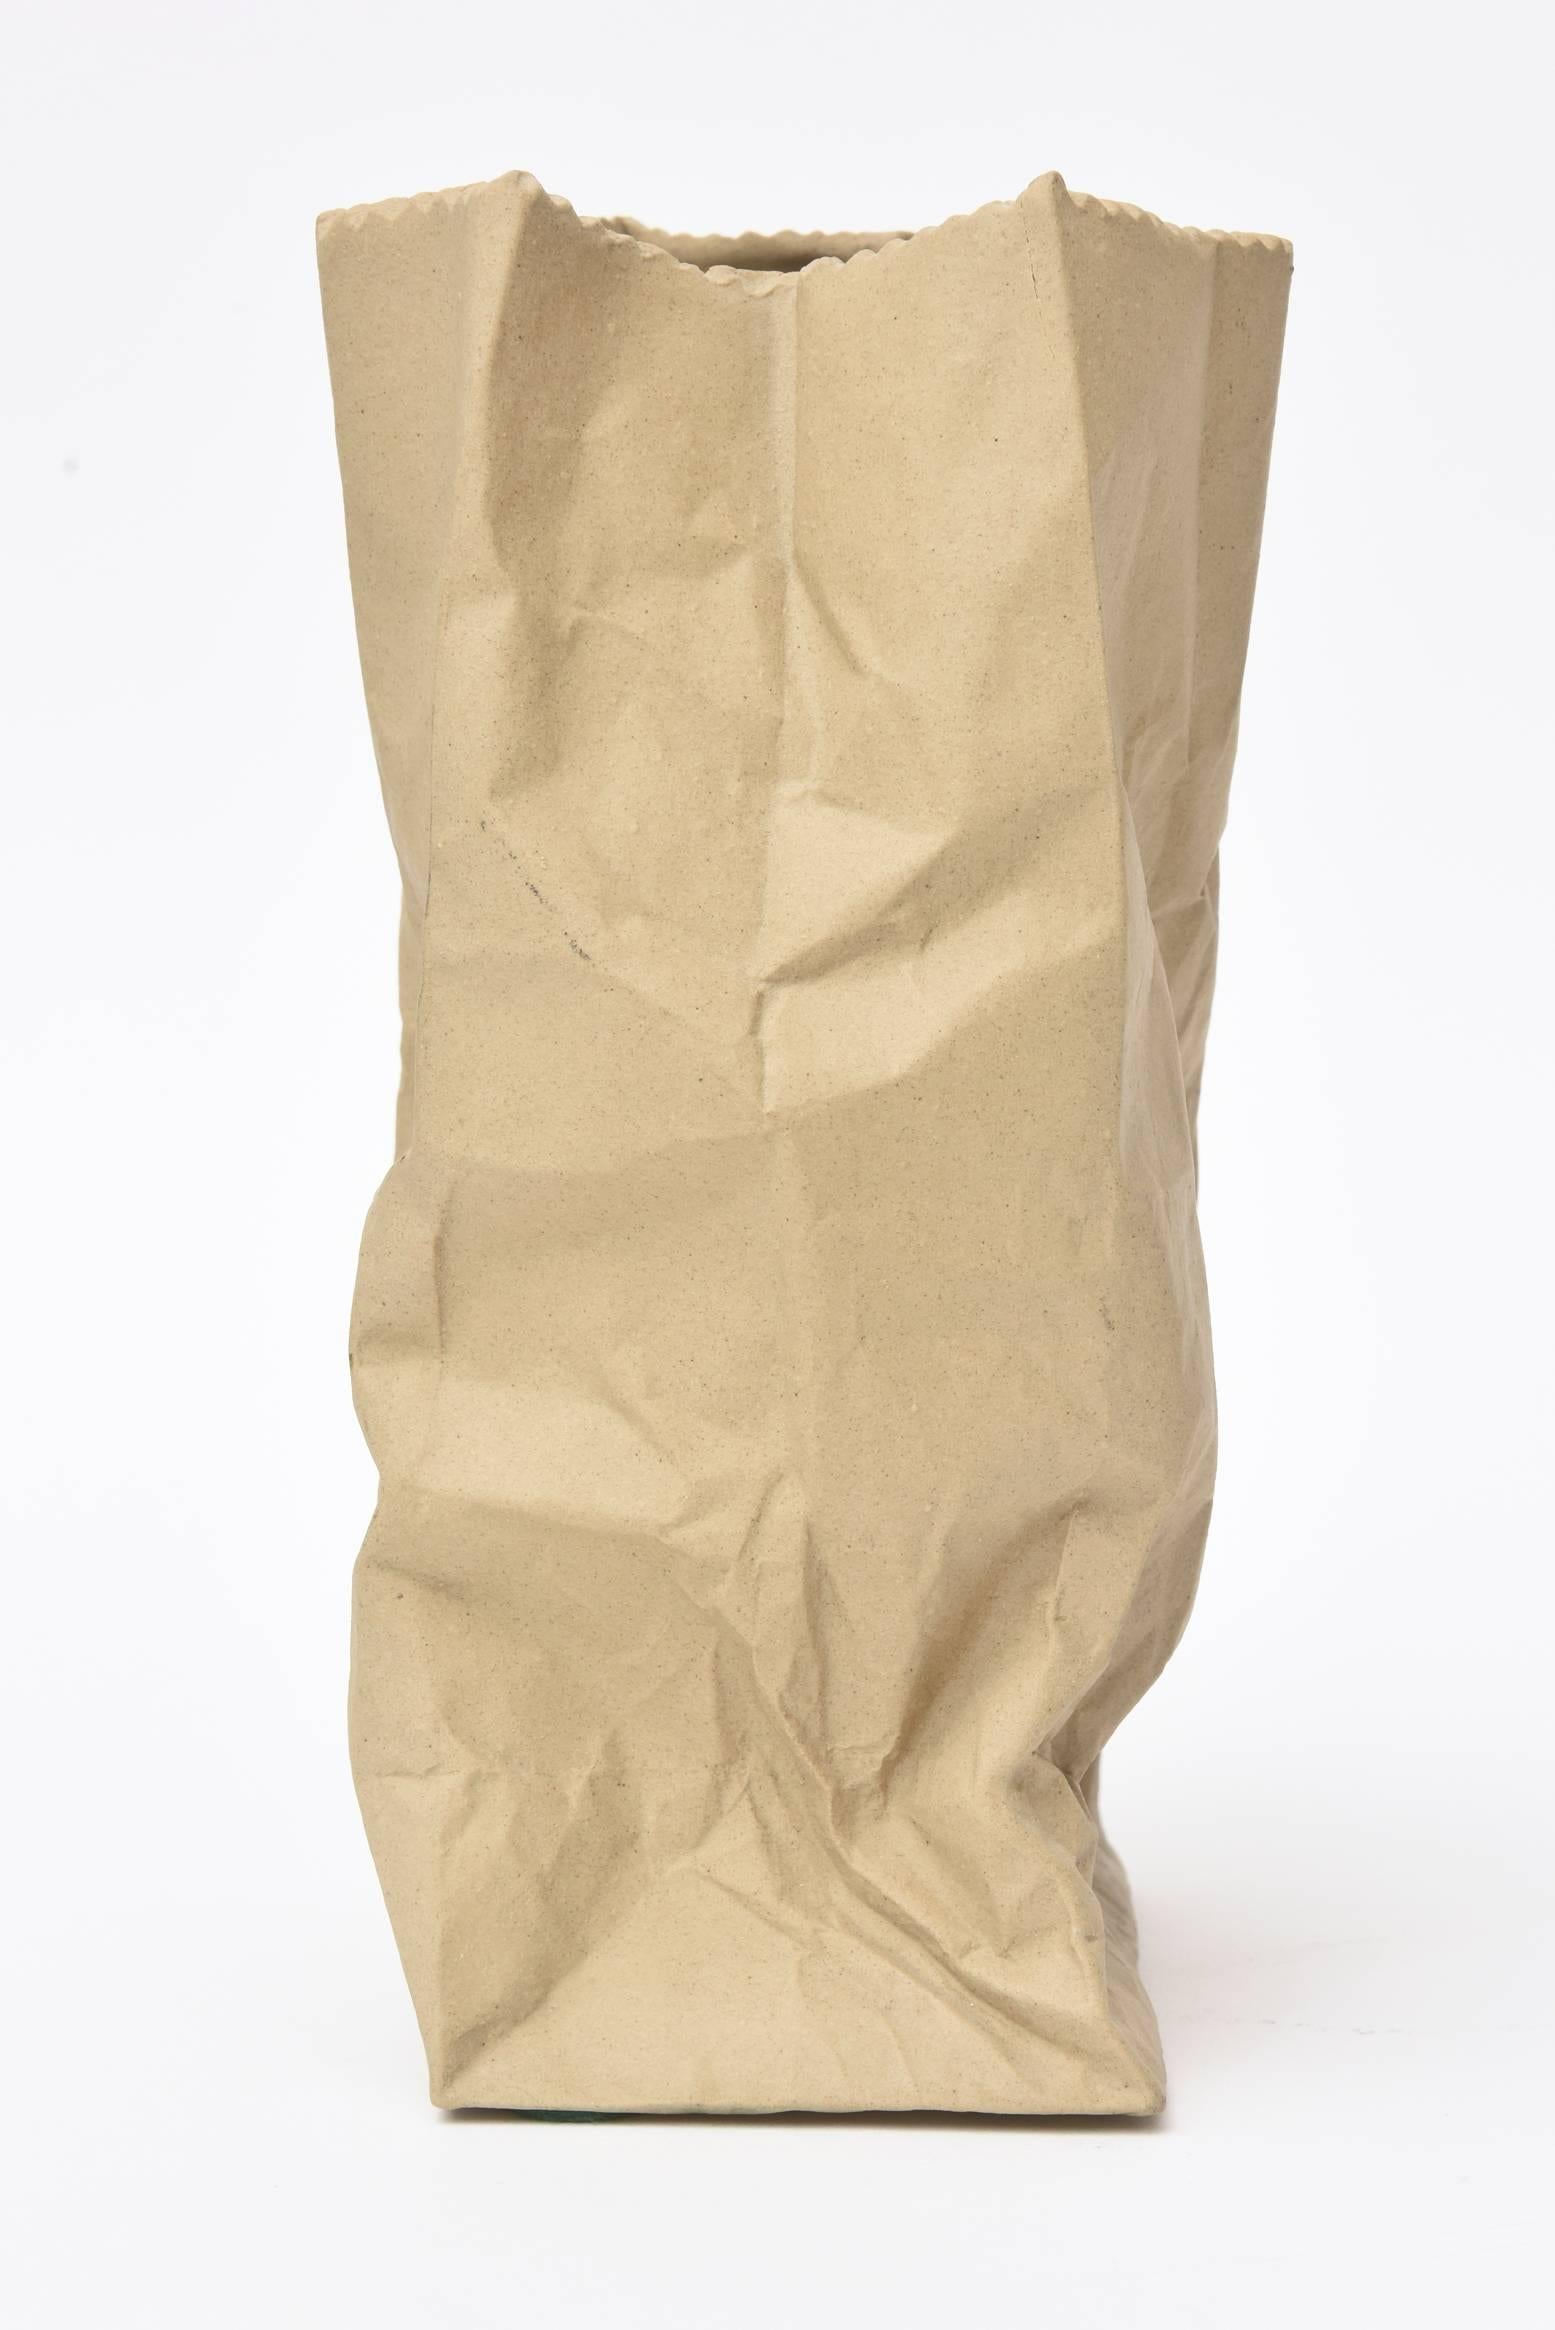 American Vintage Crushed Brown Paper Bag Ceramic Sculpture or Vase